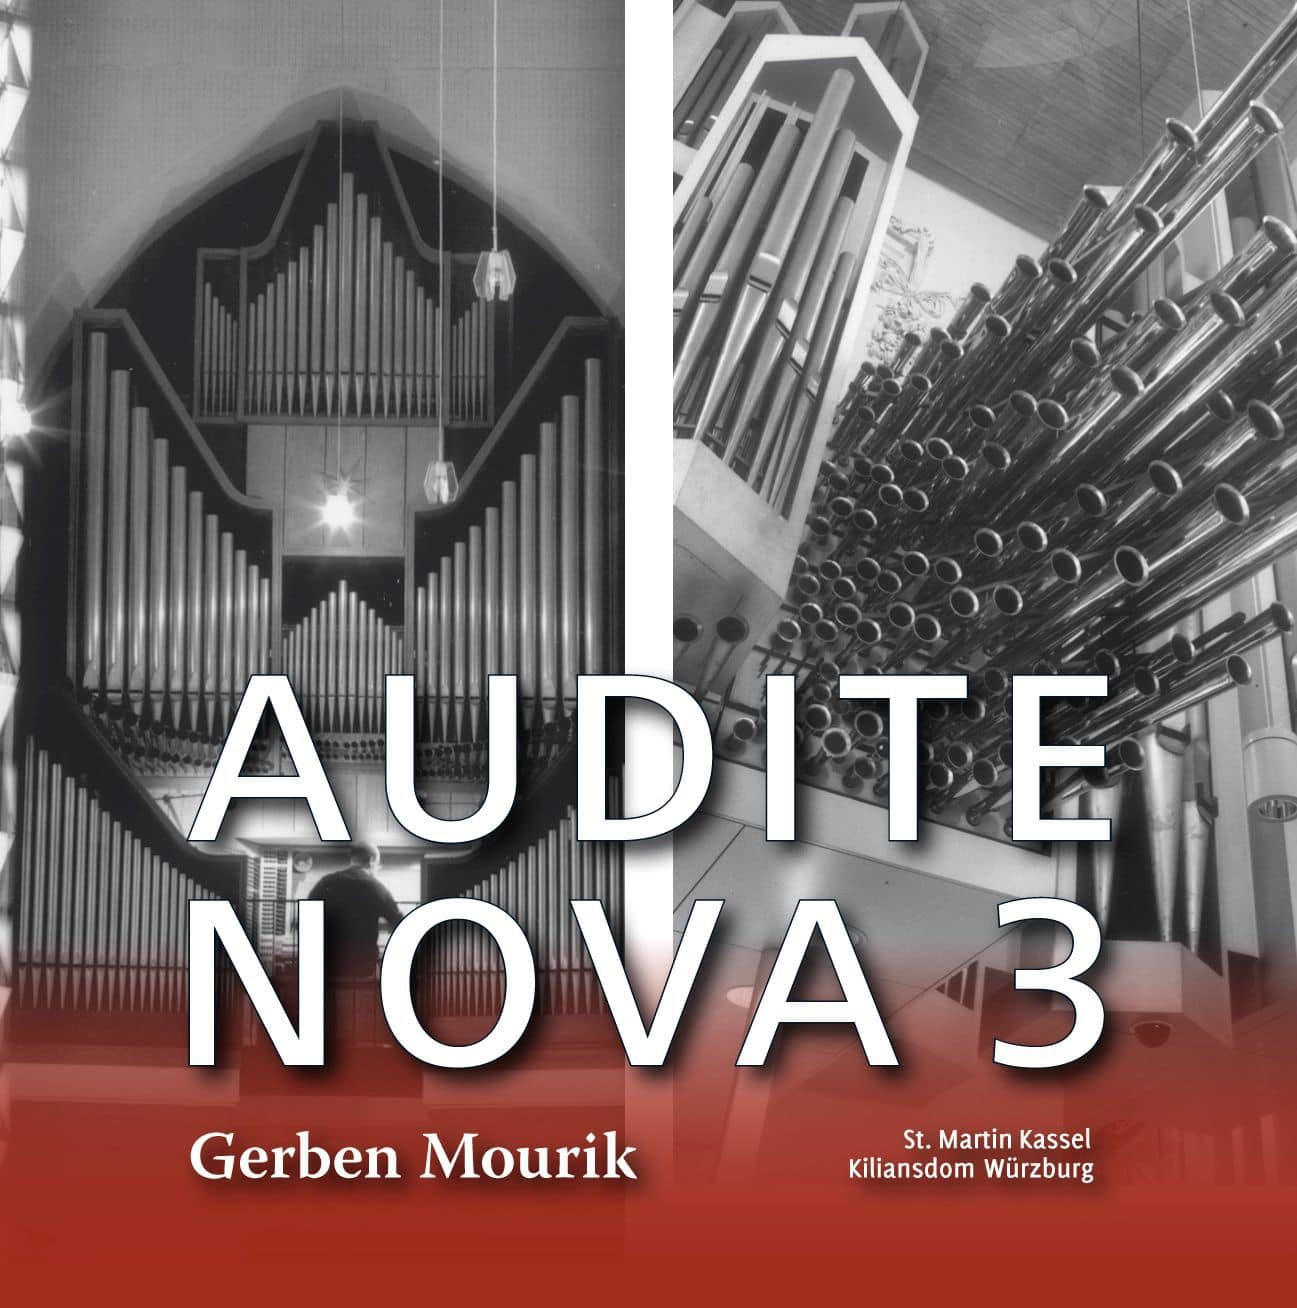 Audite Nova III